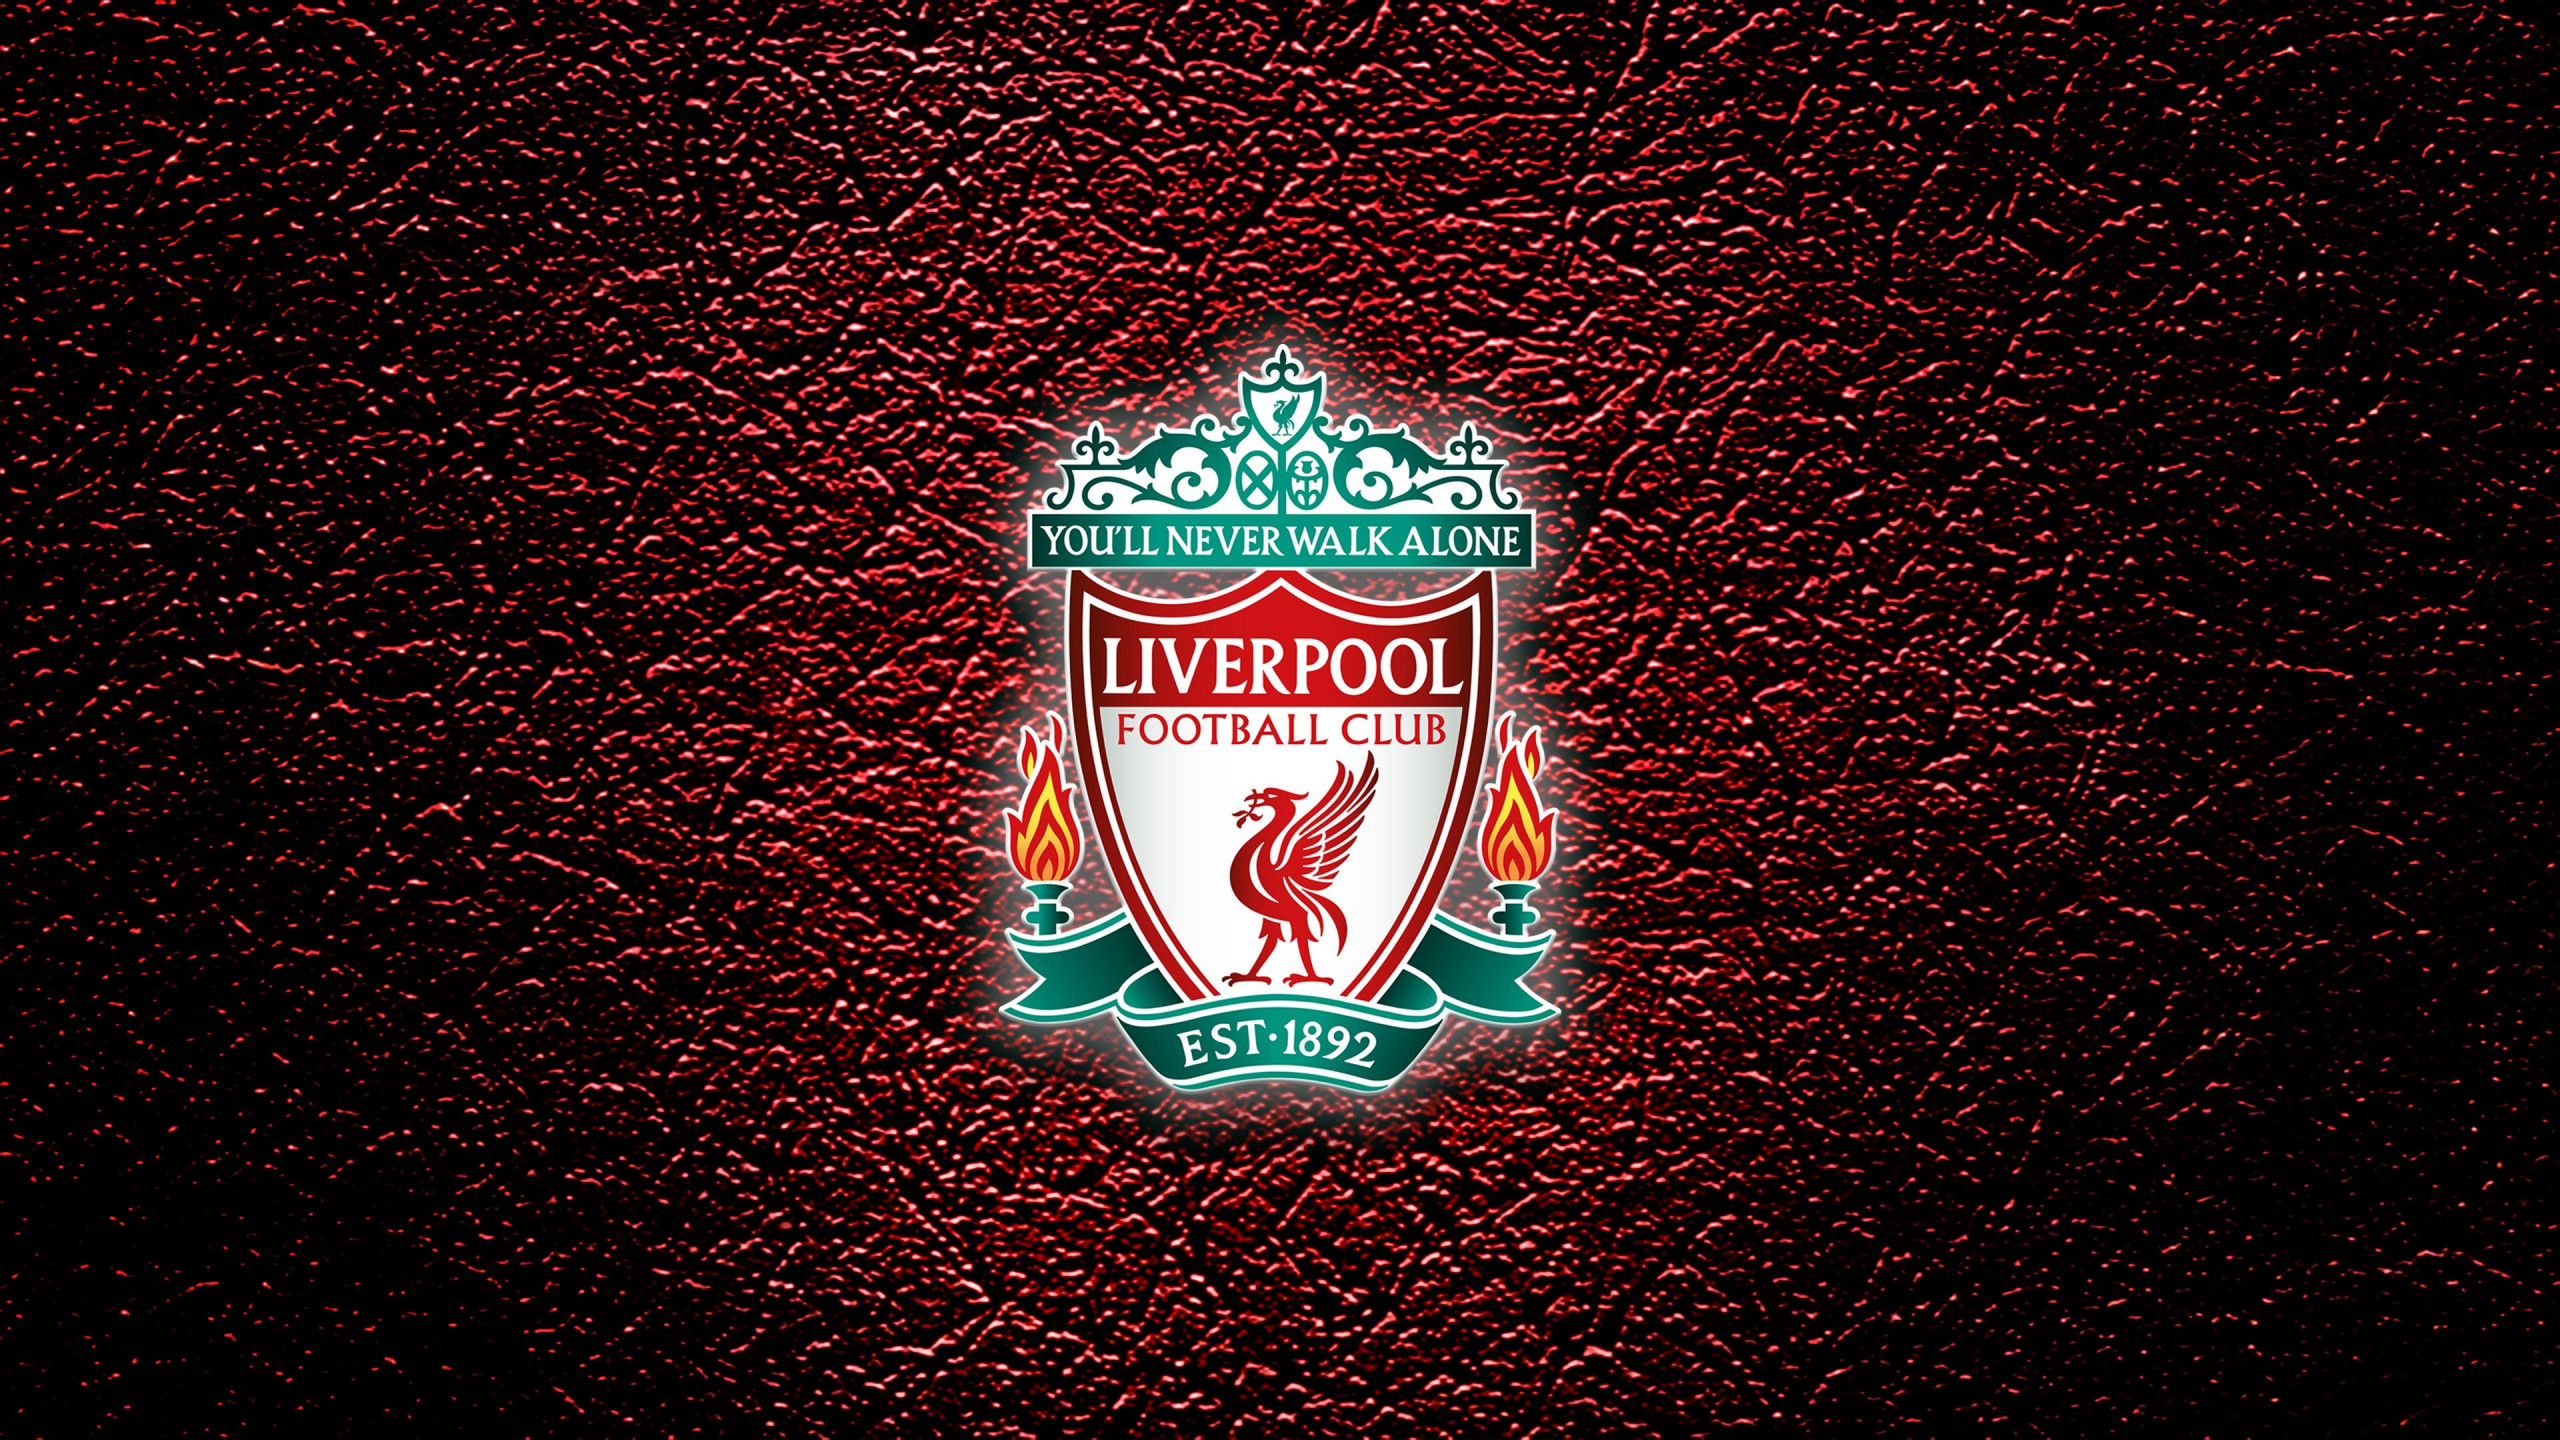 Download wallpaper: Liverpool'll never walk alone 2560x1440